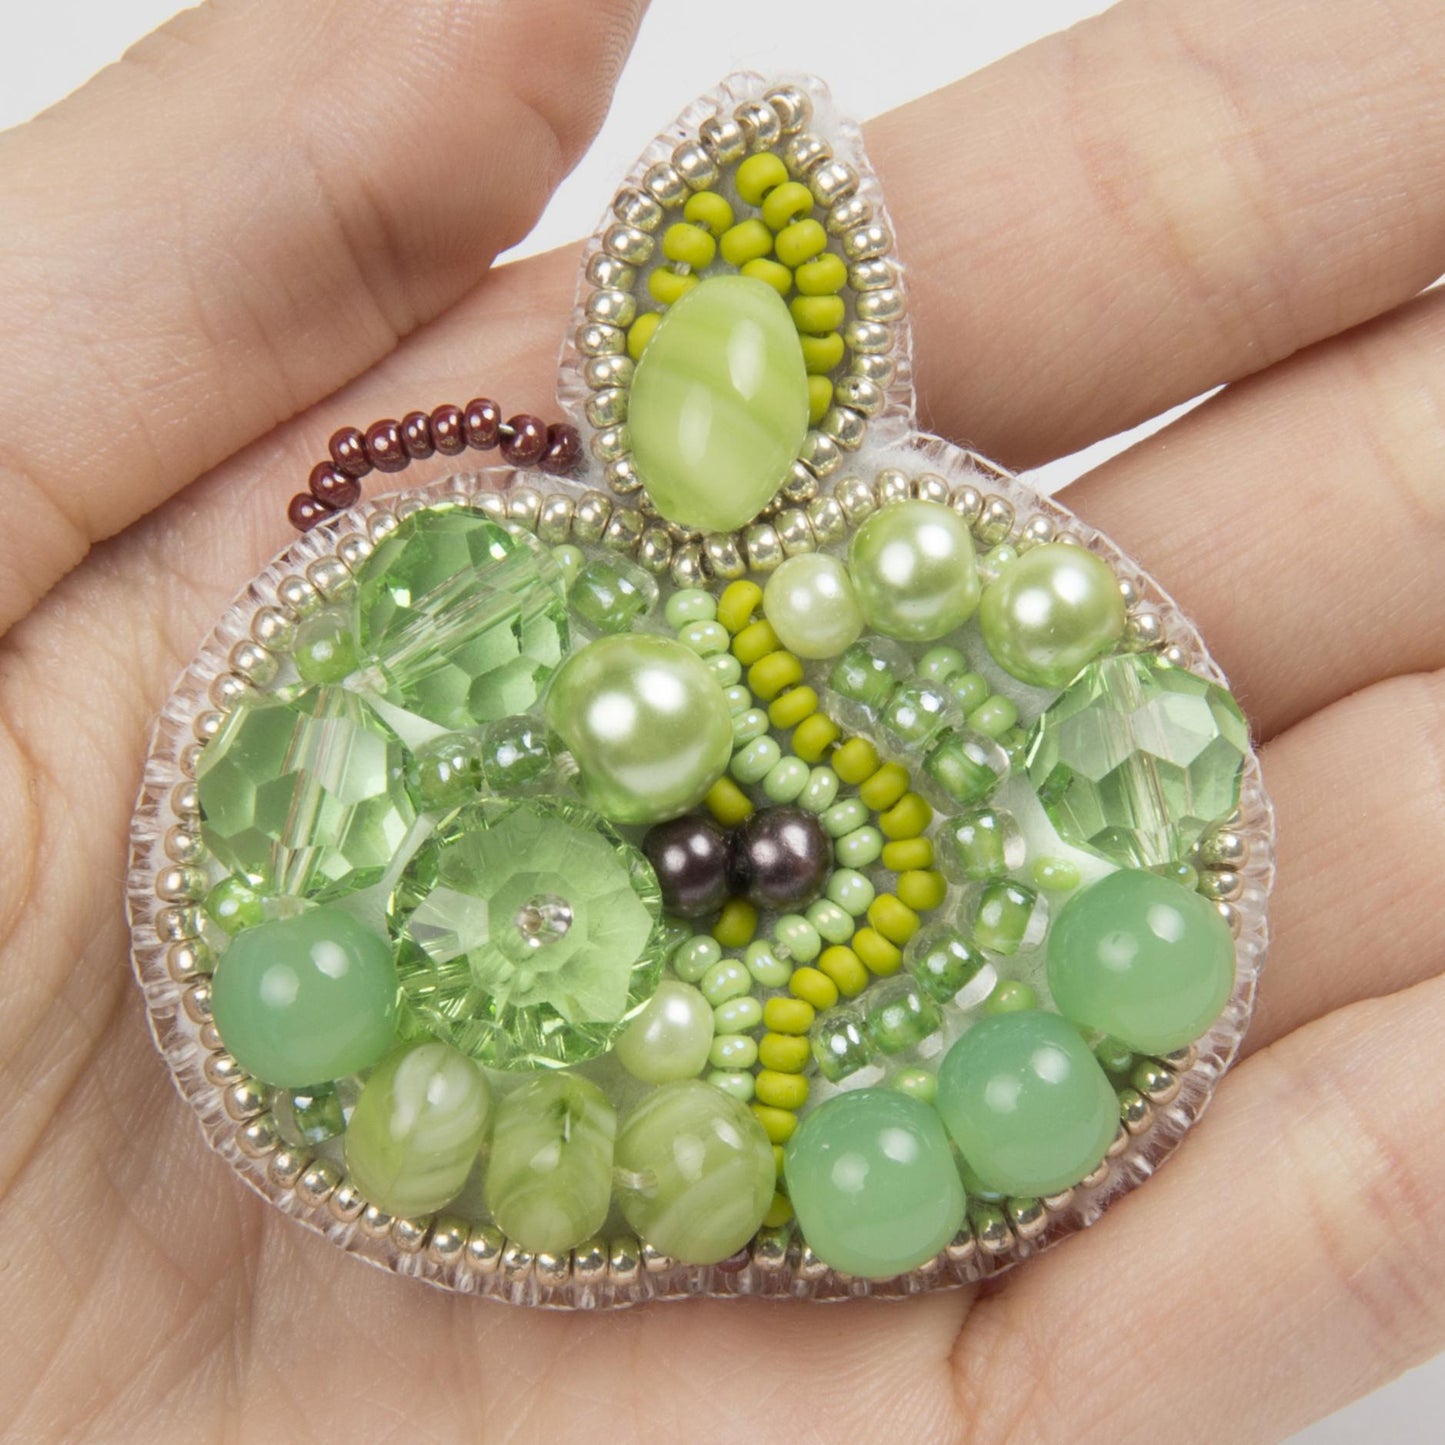 BP-256 Beadwork kit for creating broоch Crystal Art "Green apple" - Leo Hobby